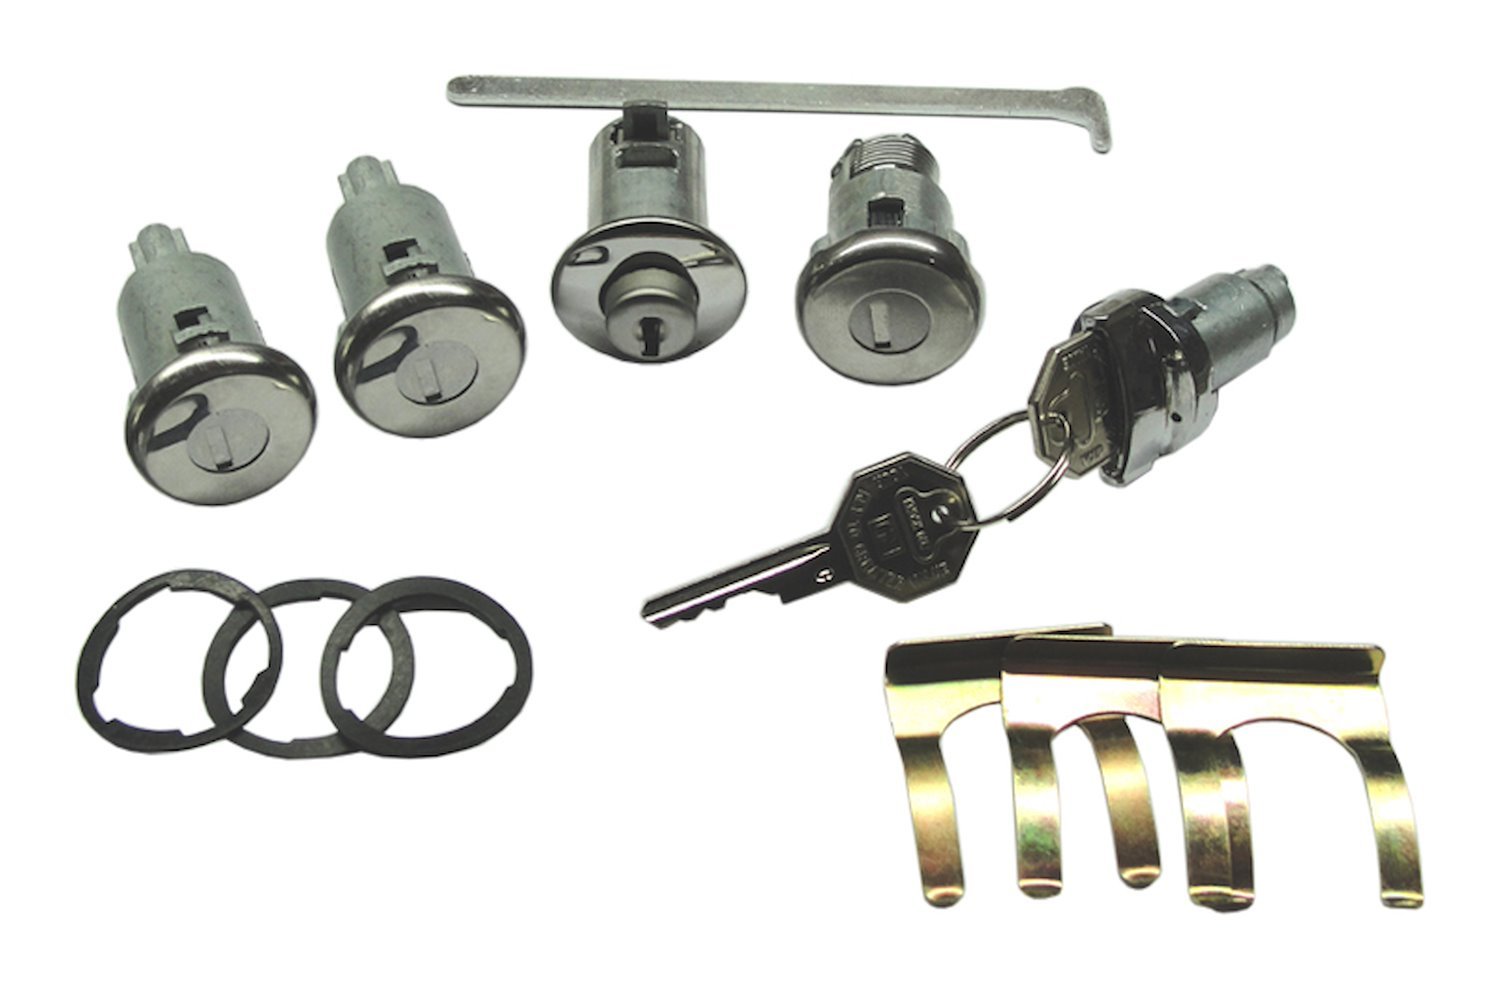 Ignition, Door, Trunk & Glovebox Lock Set Fits Select 1963 GM Models With Long Shaft Cylinders [Original Octagon]